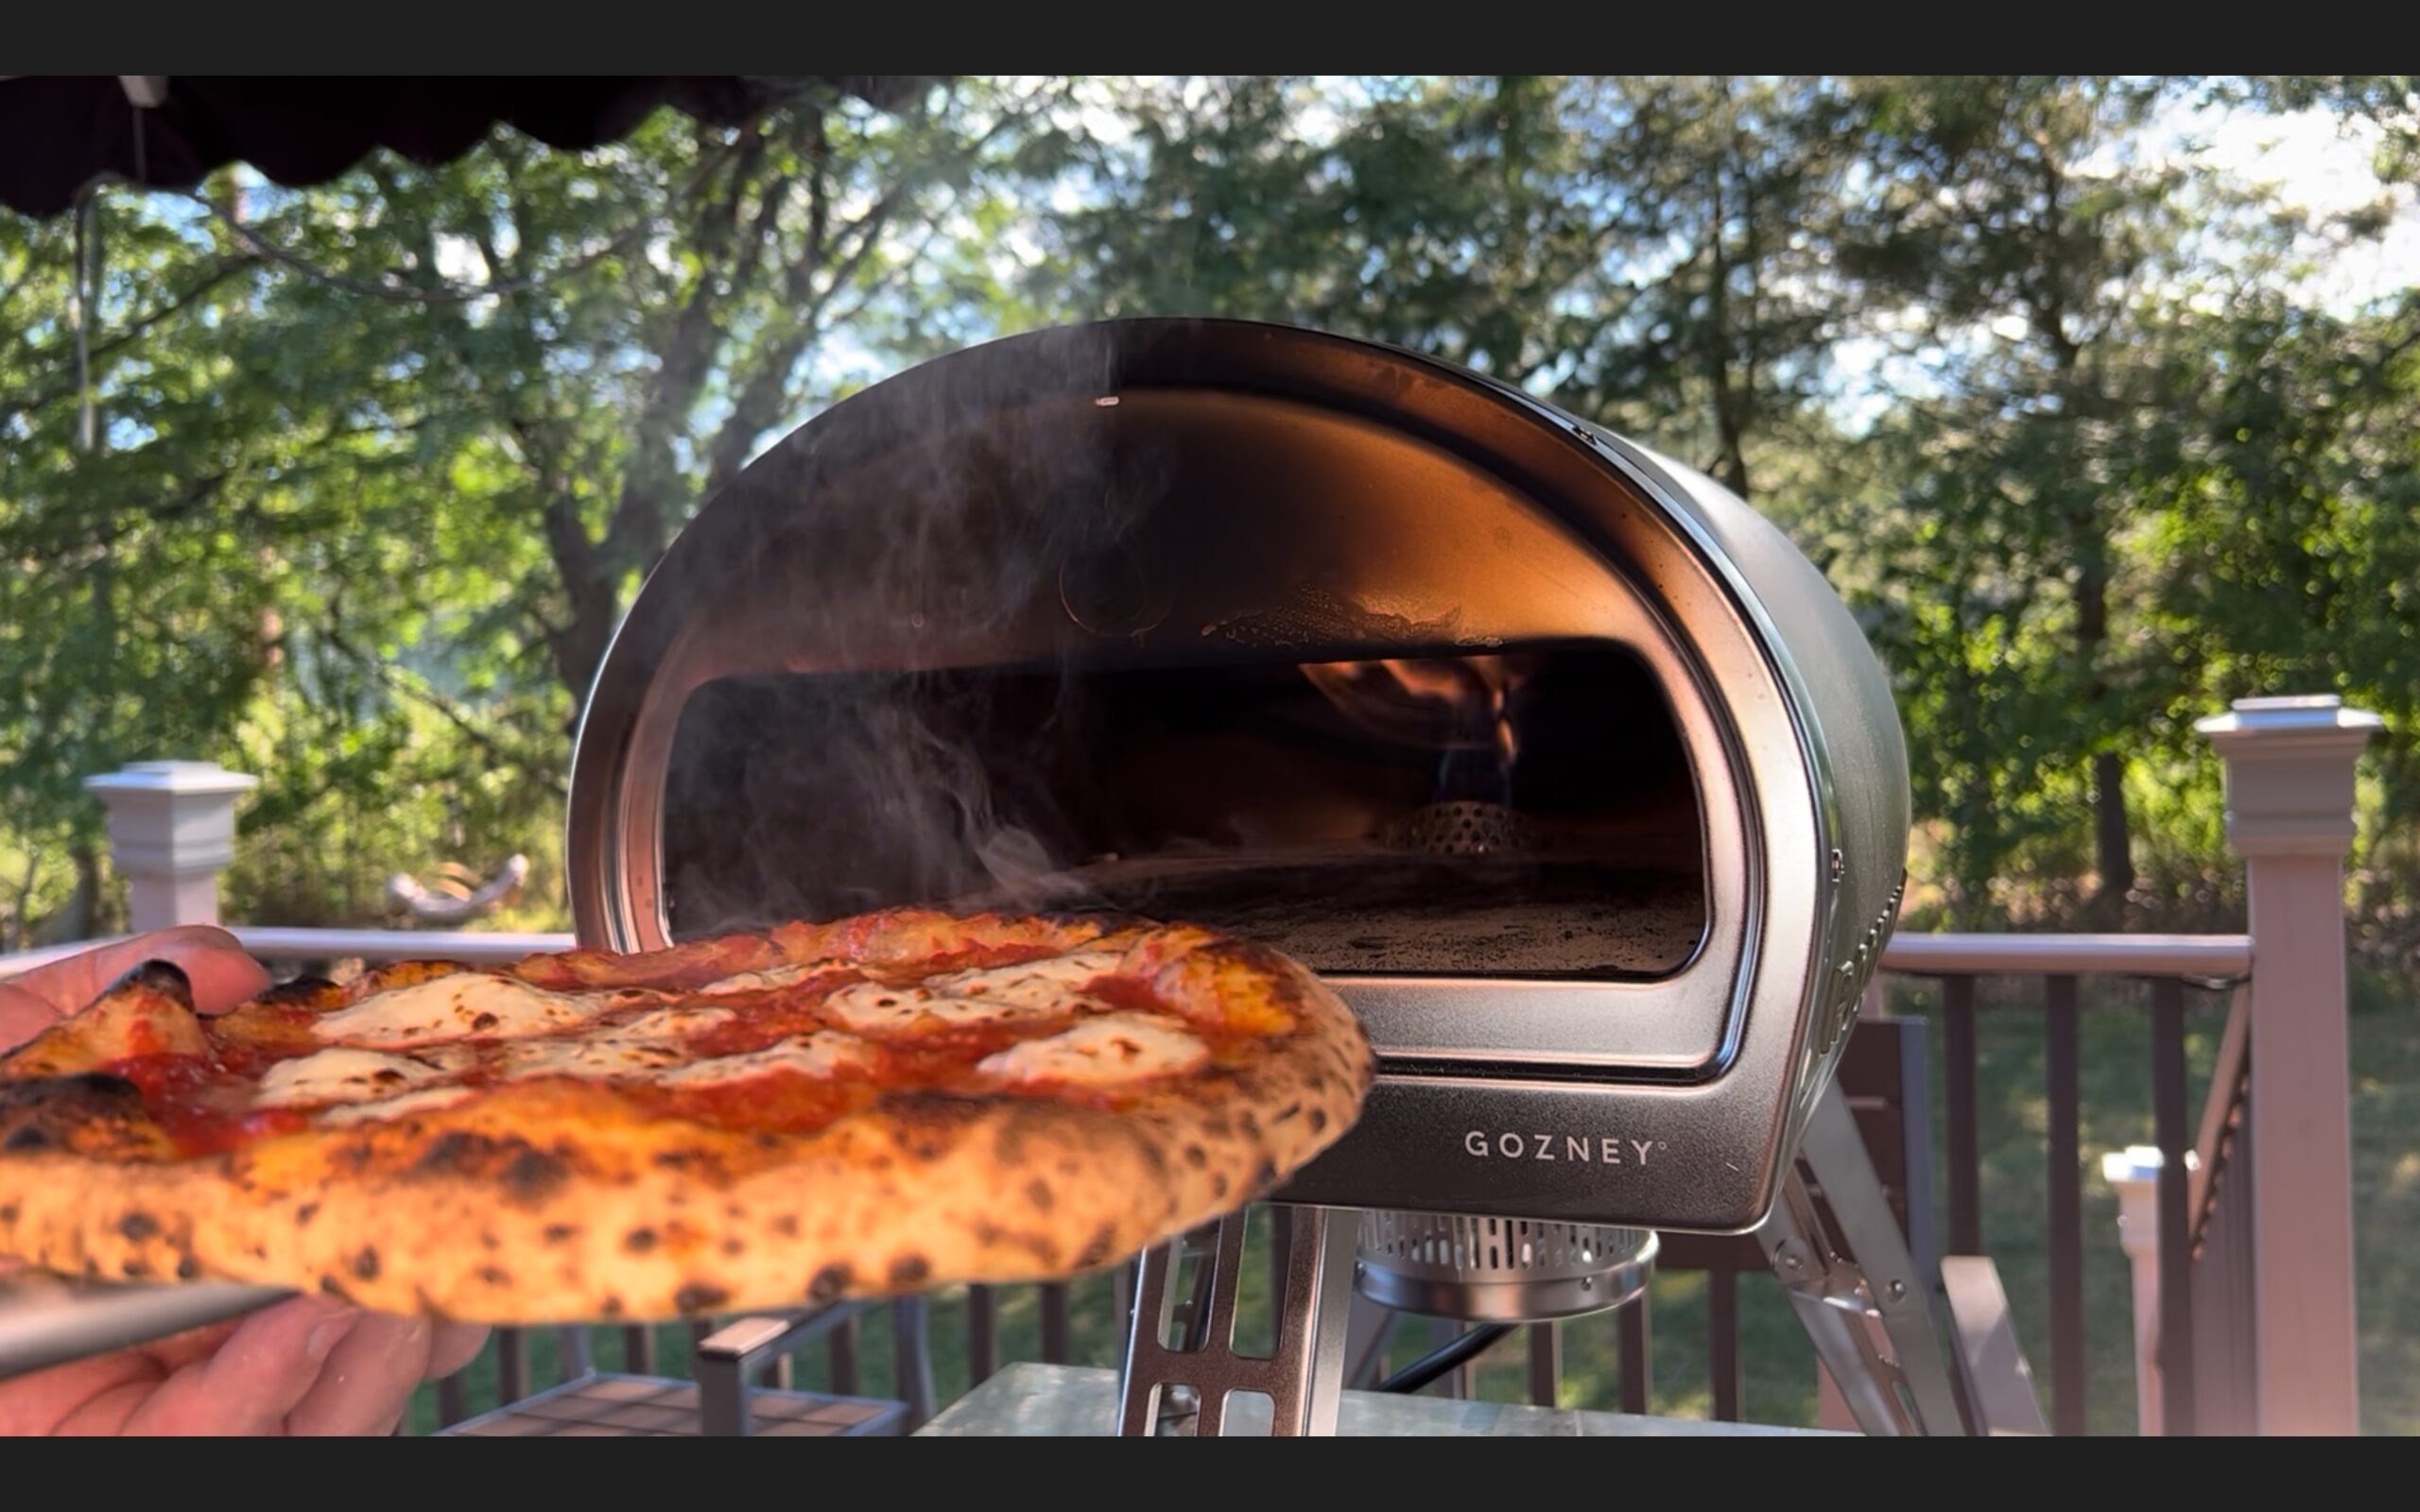 Gozney Roccbox, análisis del horno para pizzas: review con